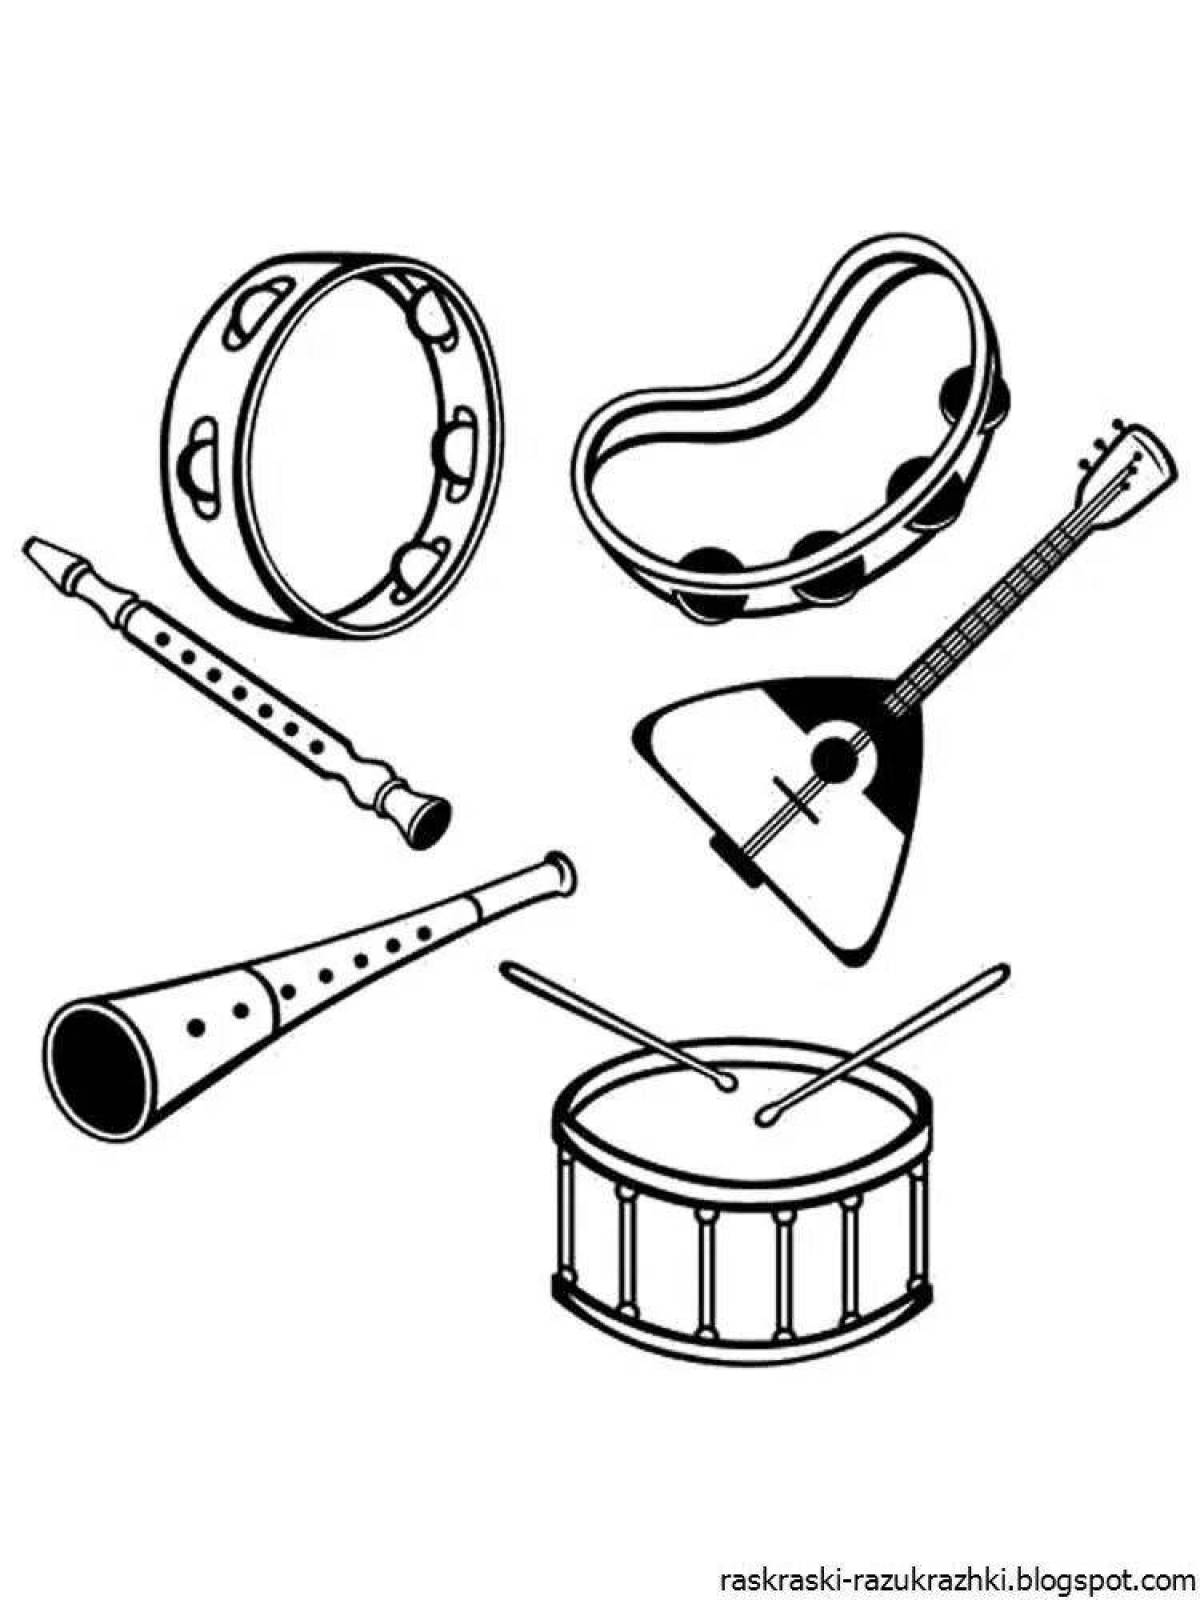 Folk musical instruments #10